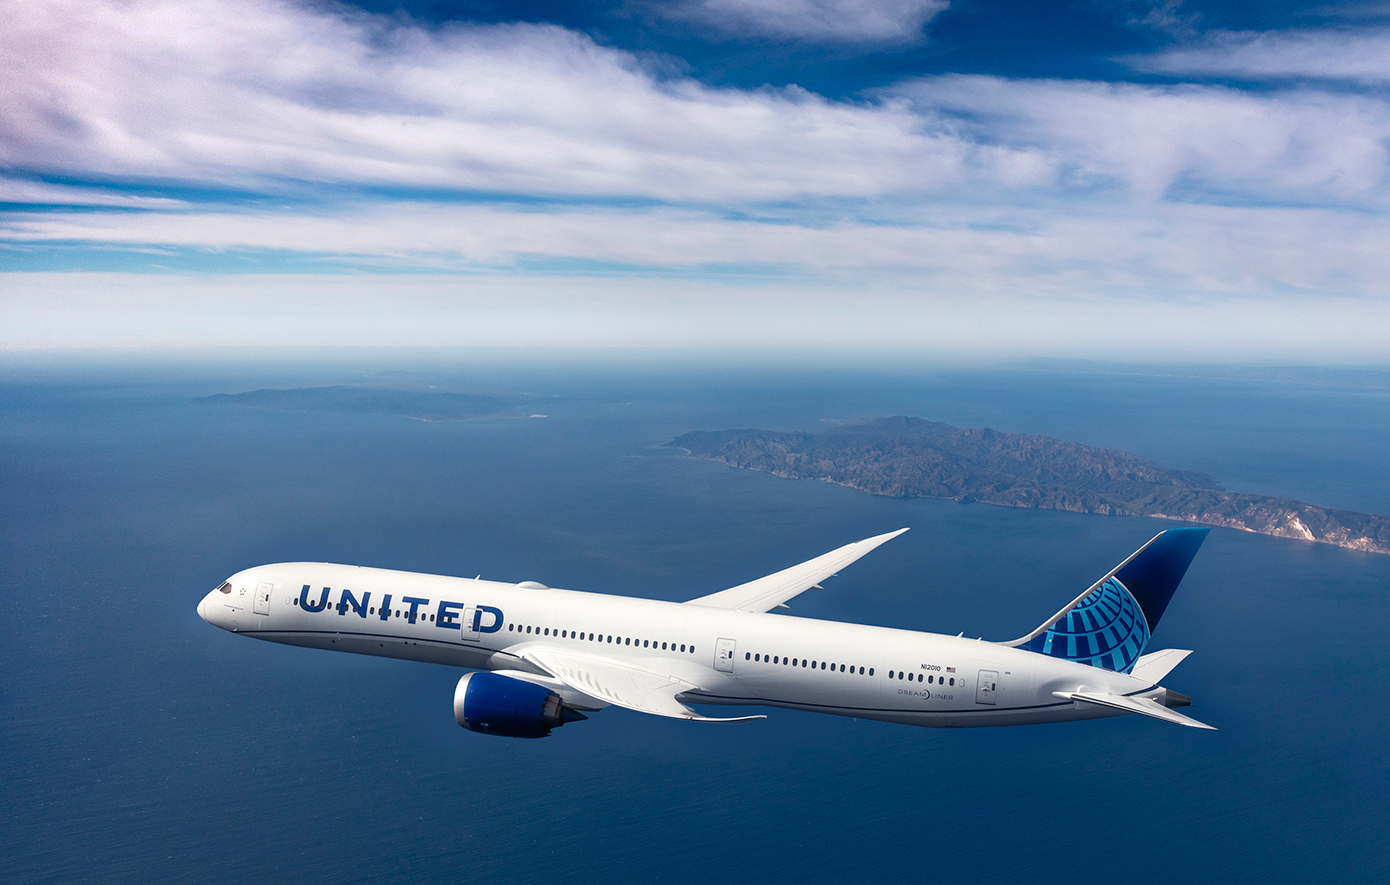 H United Airlines Επεκτείνει τις Εποχικές Πτήσεις της από την Αθήνα προς New York/Newark και Washington D.C.